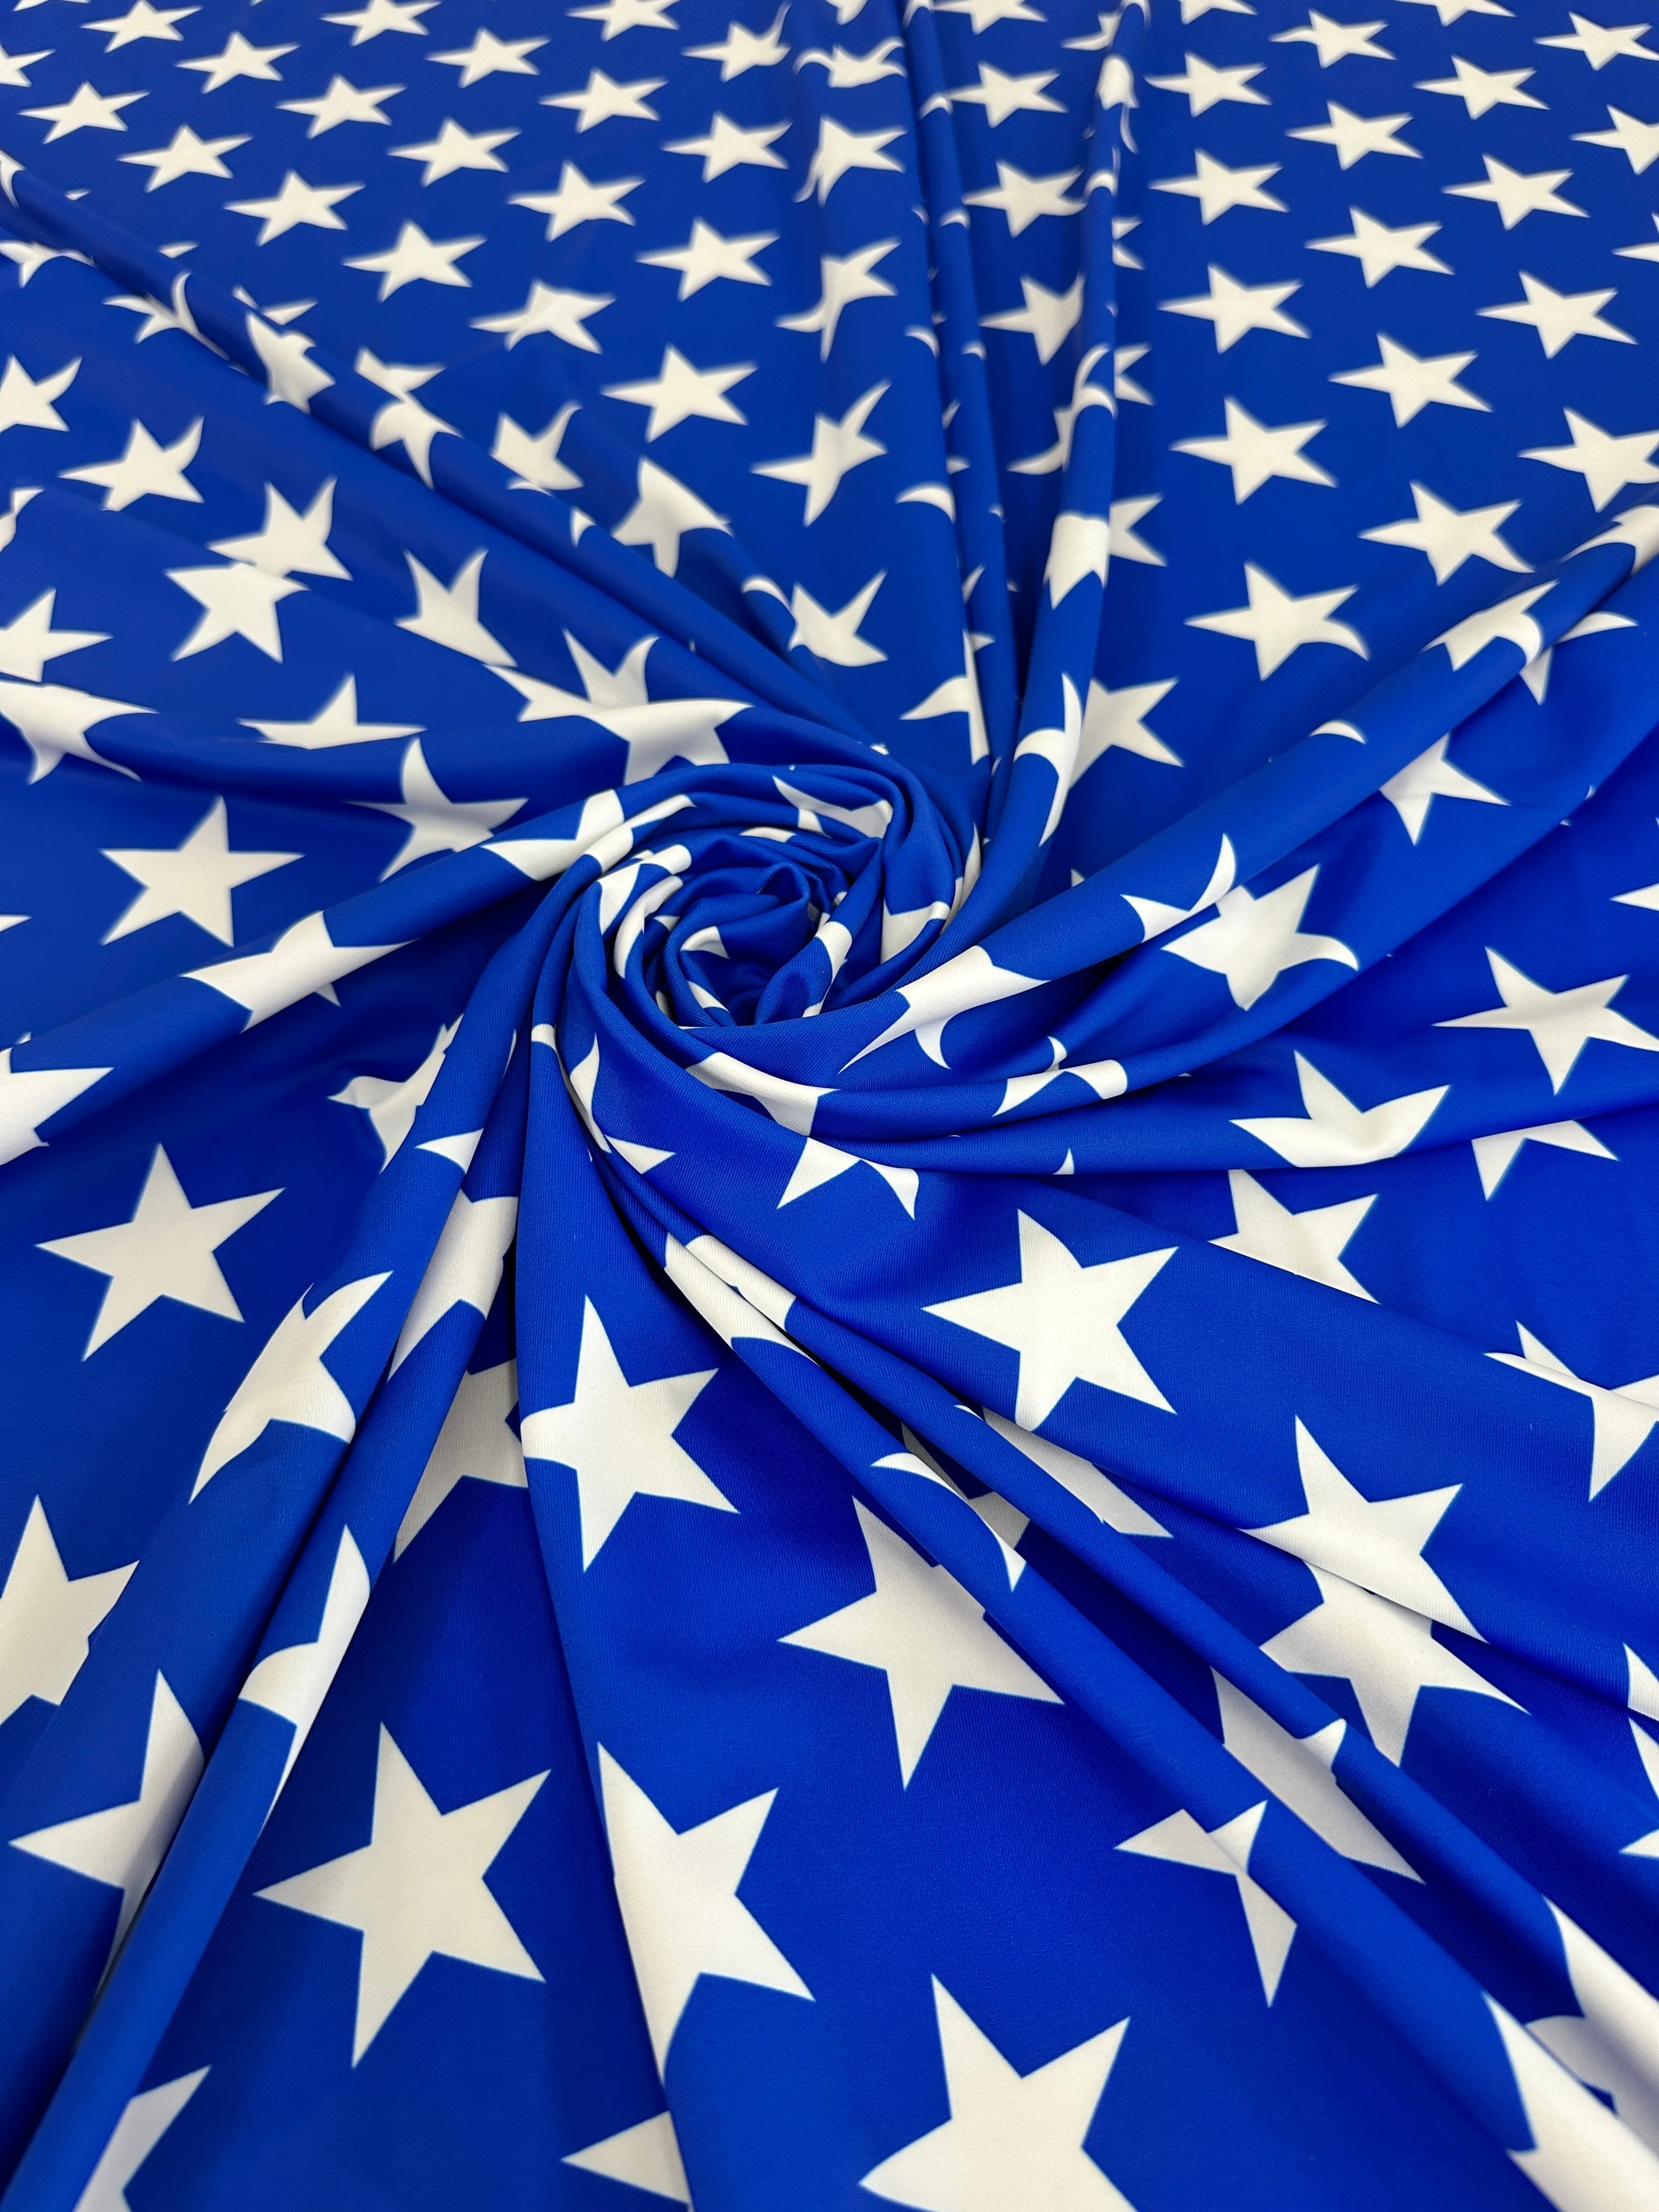 Royal Blue Star Print Nylon Spandex, Royal Blue Spandex, Nylon Spandex, Shiny Spandex,Stretch Fabric, 4 way stretch fabric, Fabric on Sale, Activewear Fabric, Polyester Fabric